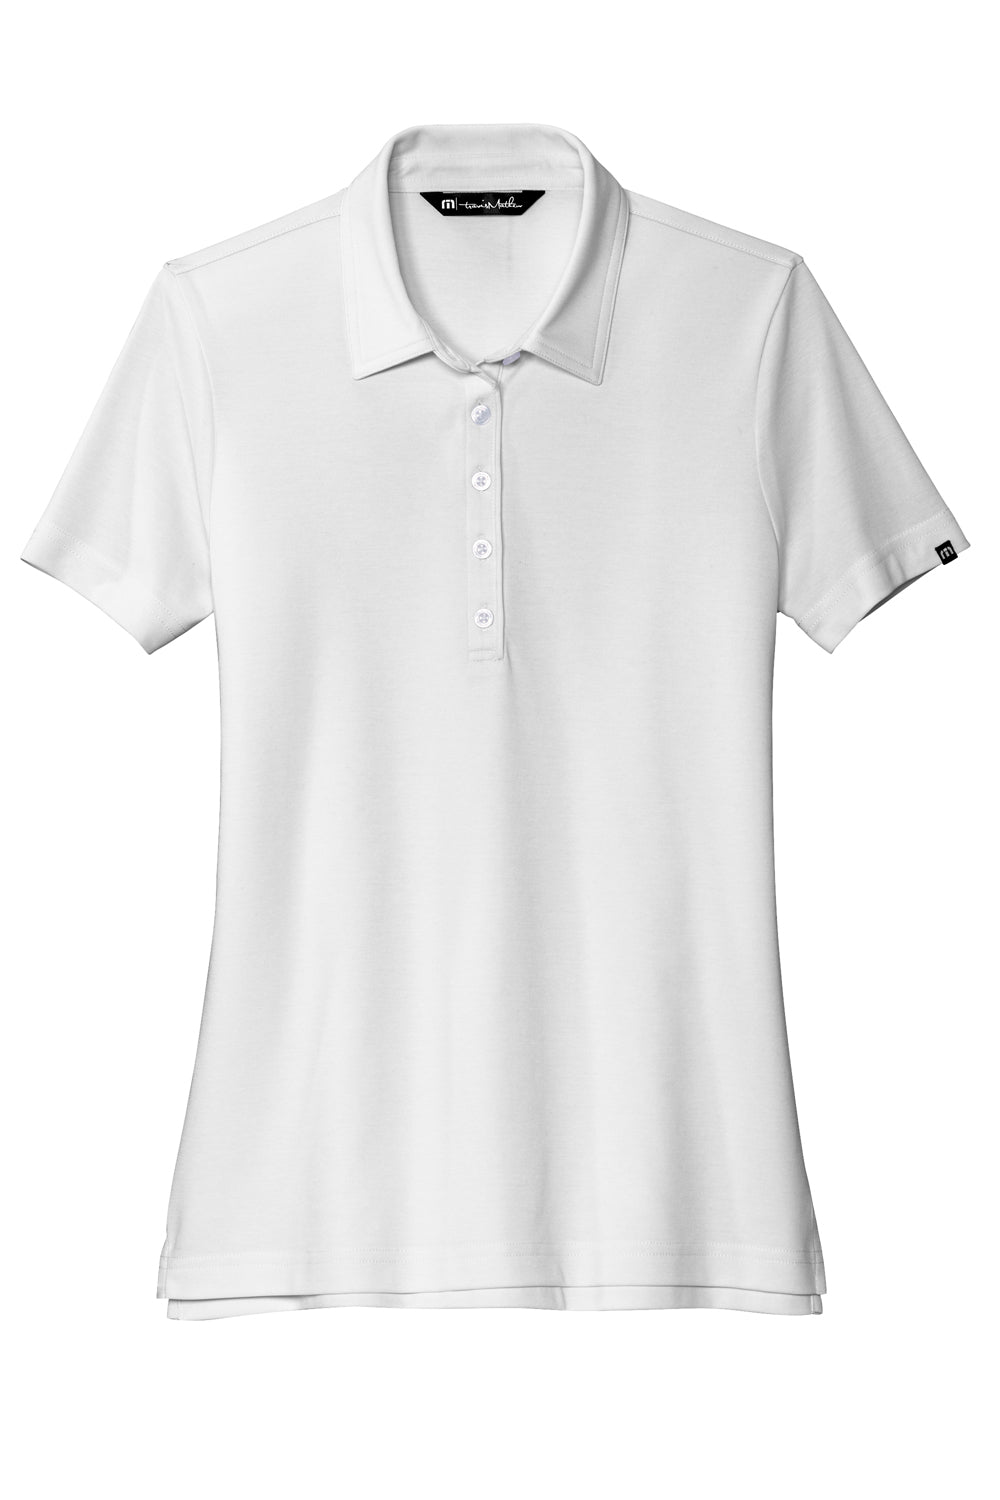 TravisMathew TM1WW001 Womens Oceanside Wrinkle Resistant Short Sleeve Polo Shirt White Flat Front